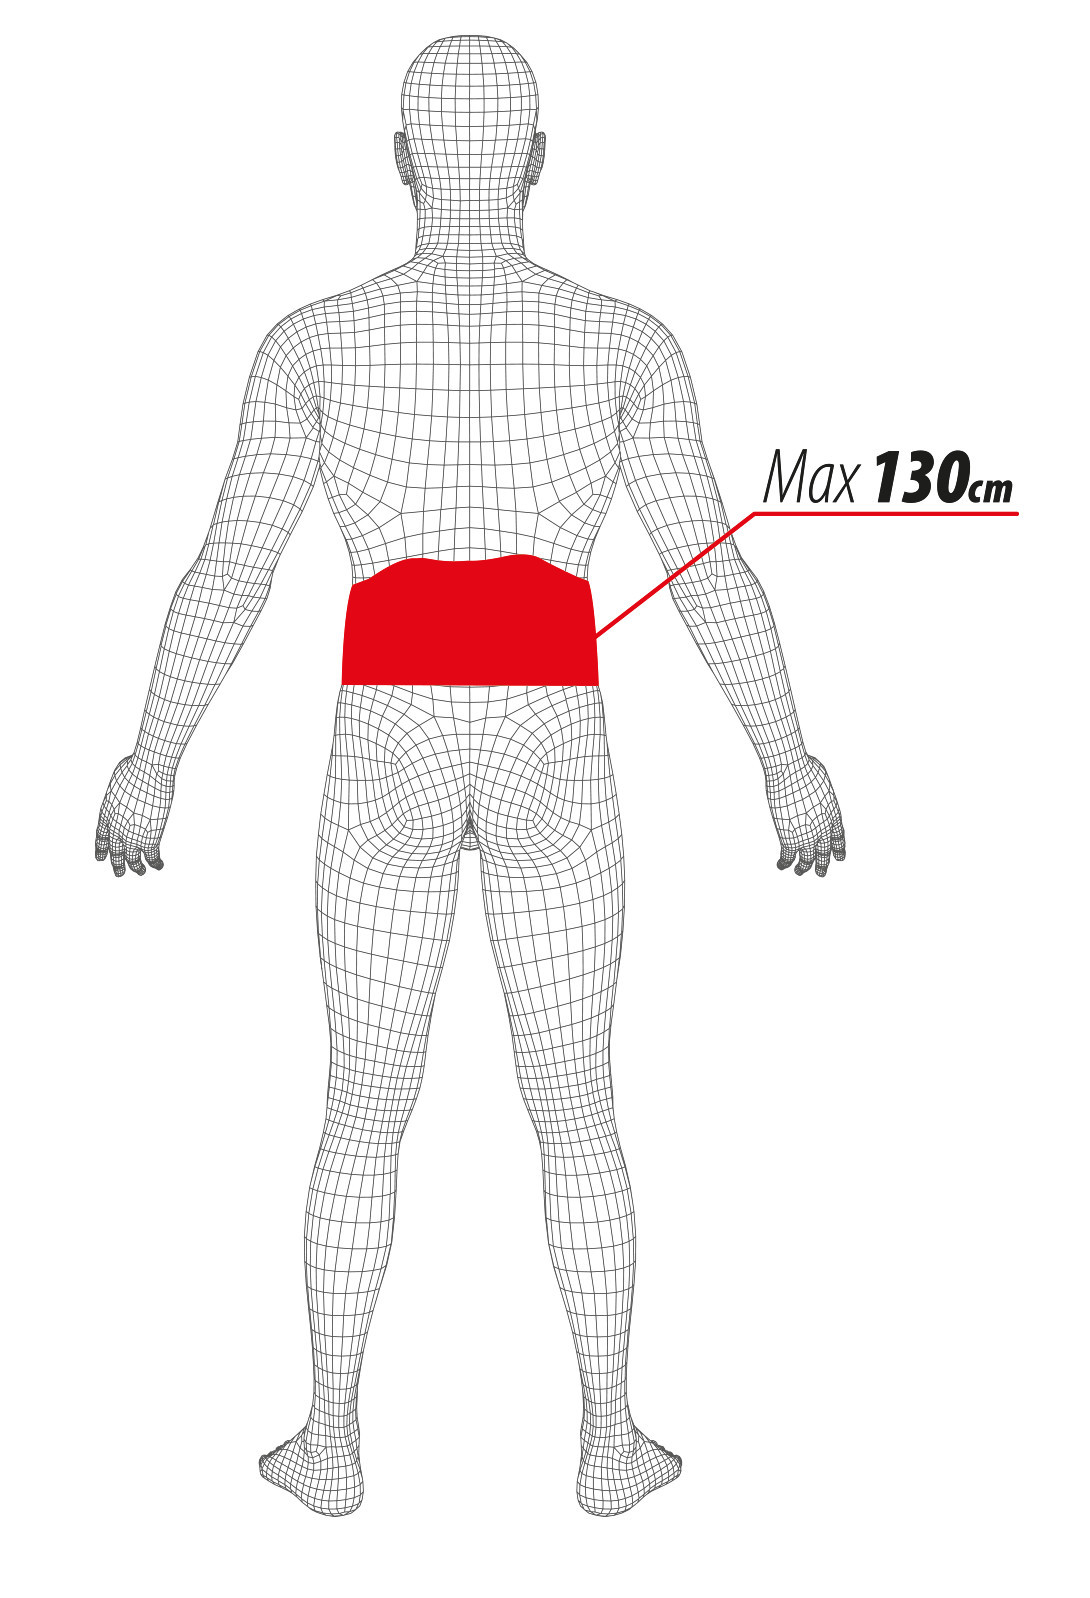 T-Maxter lumbar protection belt for bikers thumb